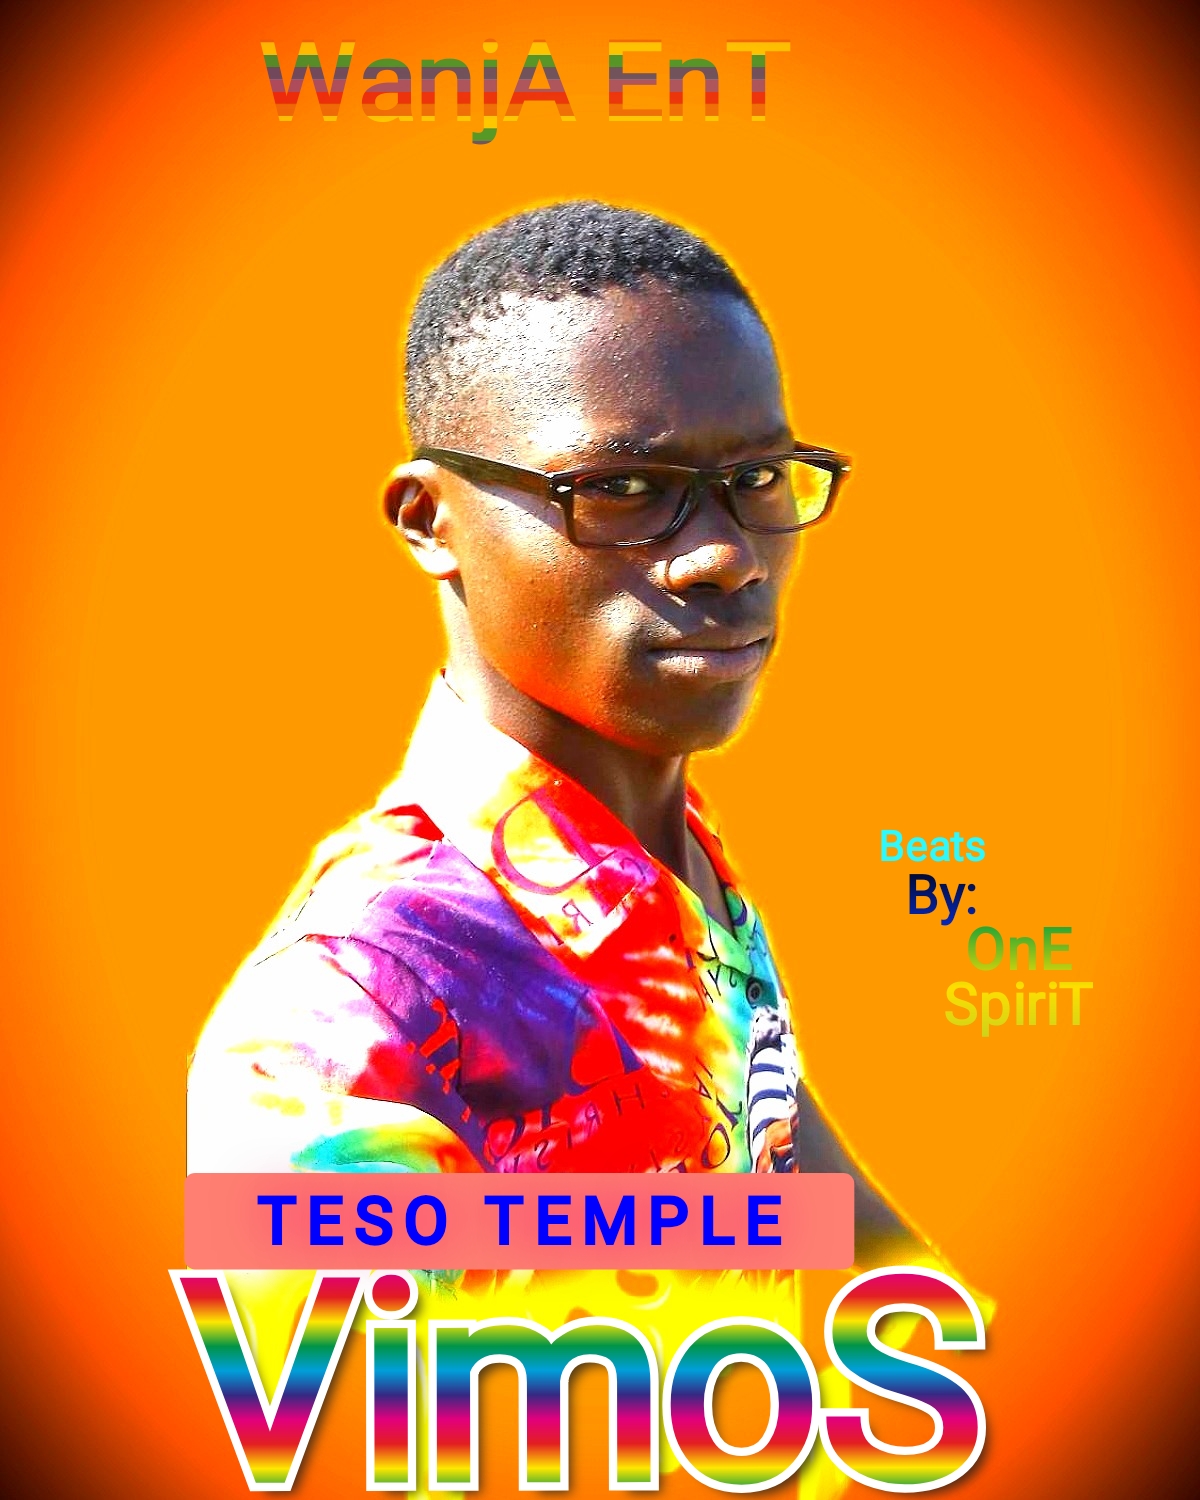 Teso temple